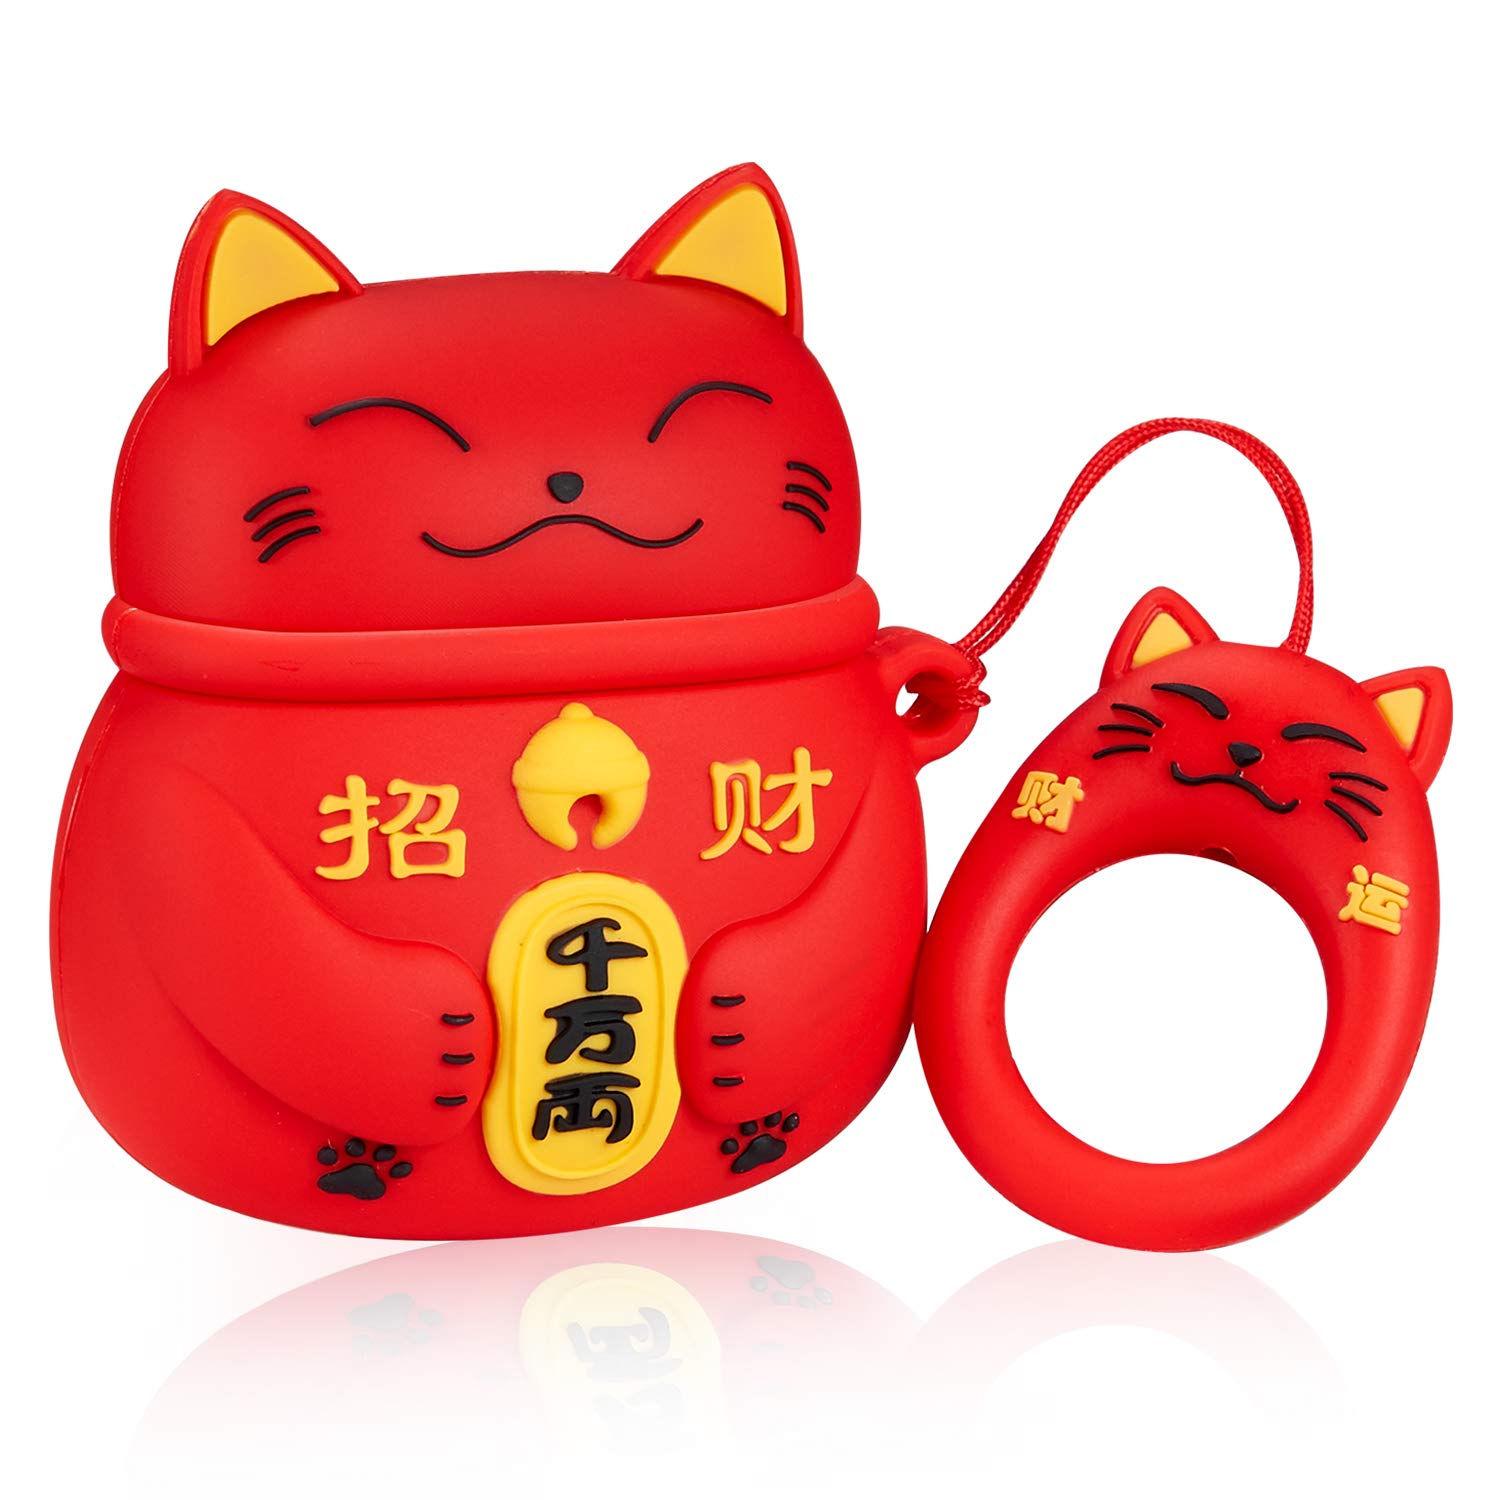 Red Maneki-neko Lucky Cat Apple Airpods Case